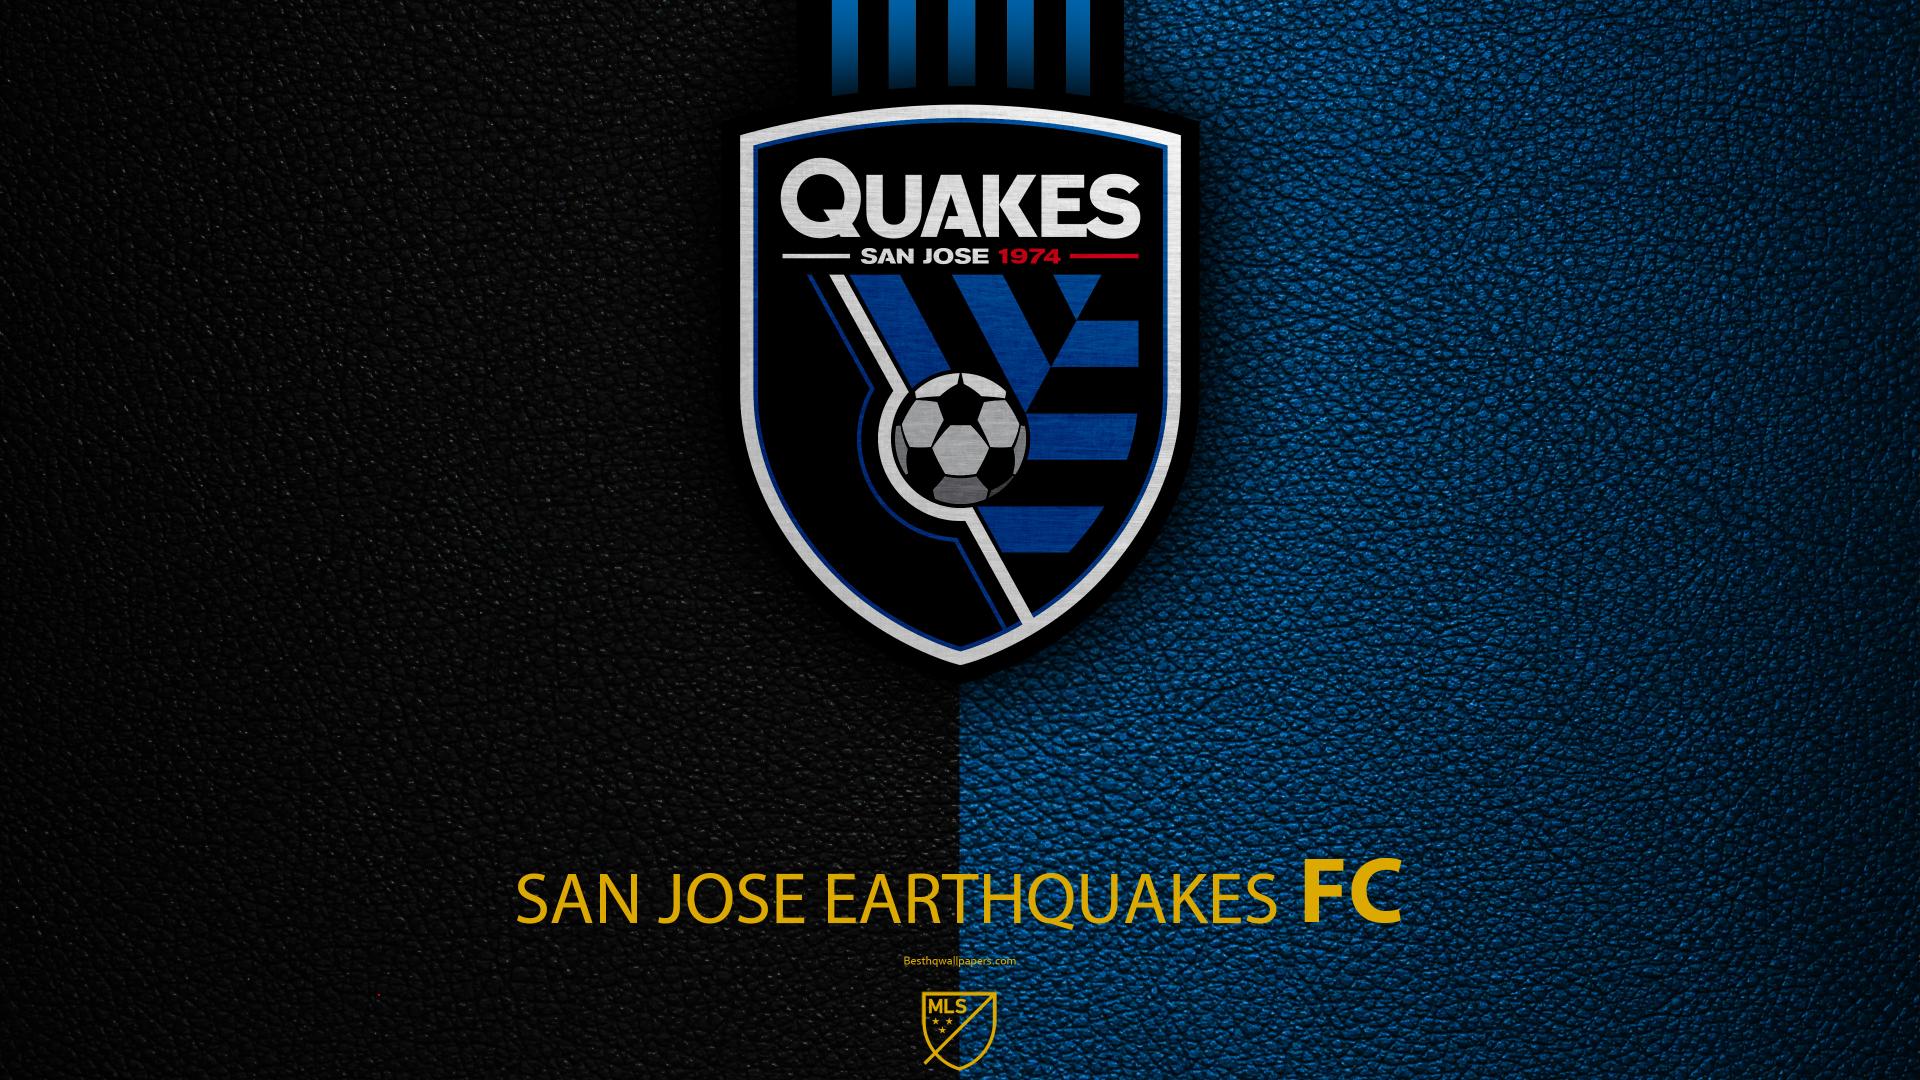 San Jose Earthquakes Wallpaper 21   3840 X 2400 stmednet